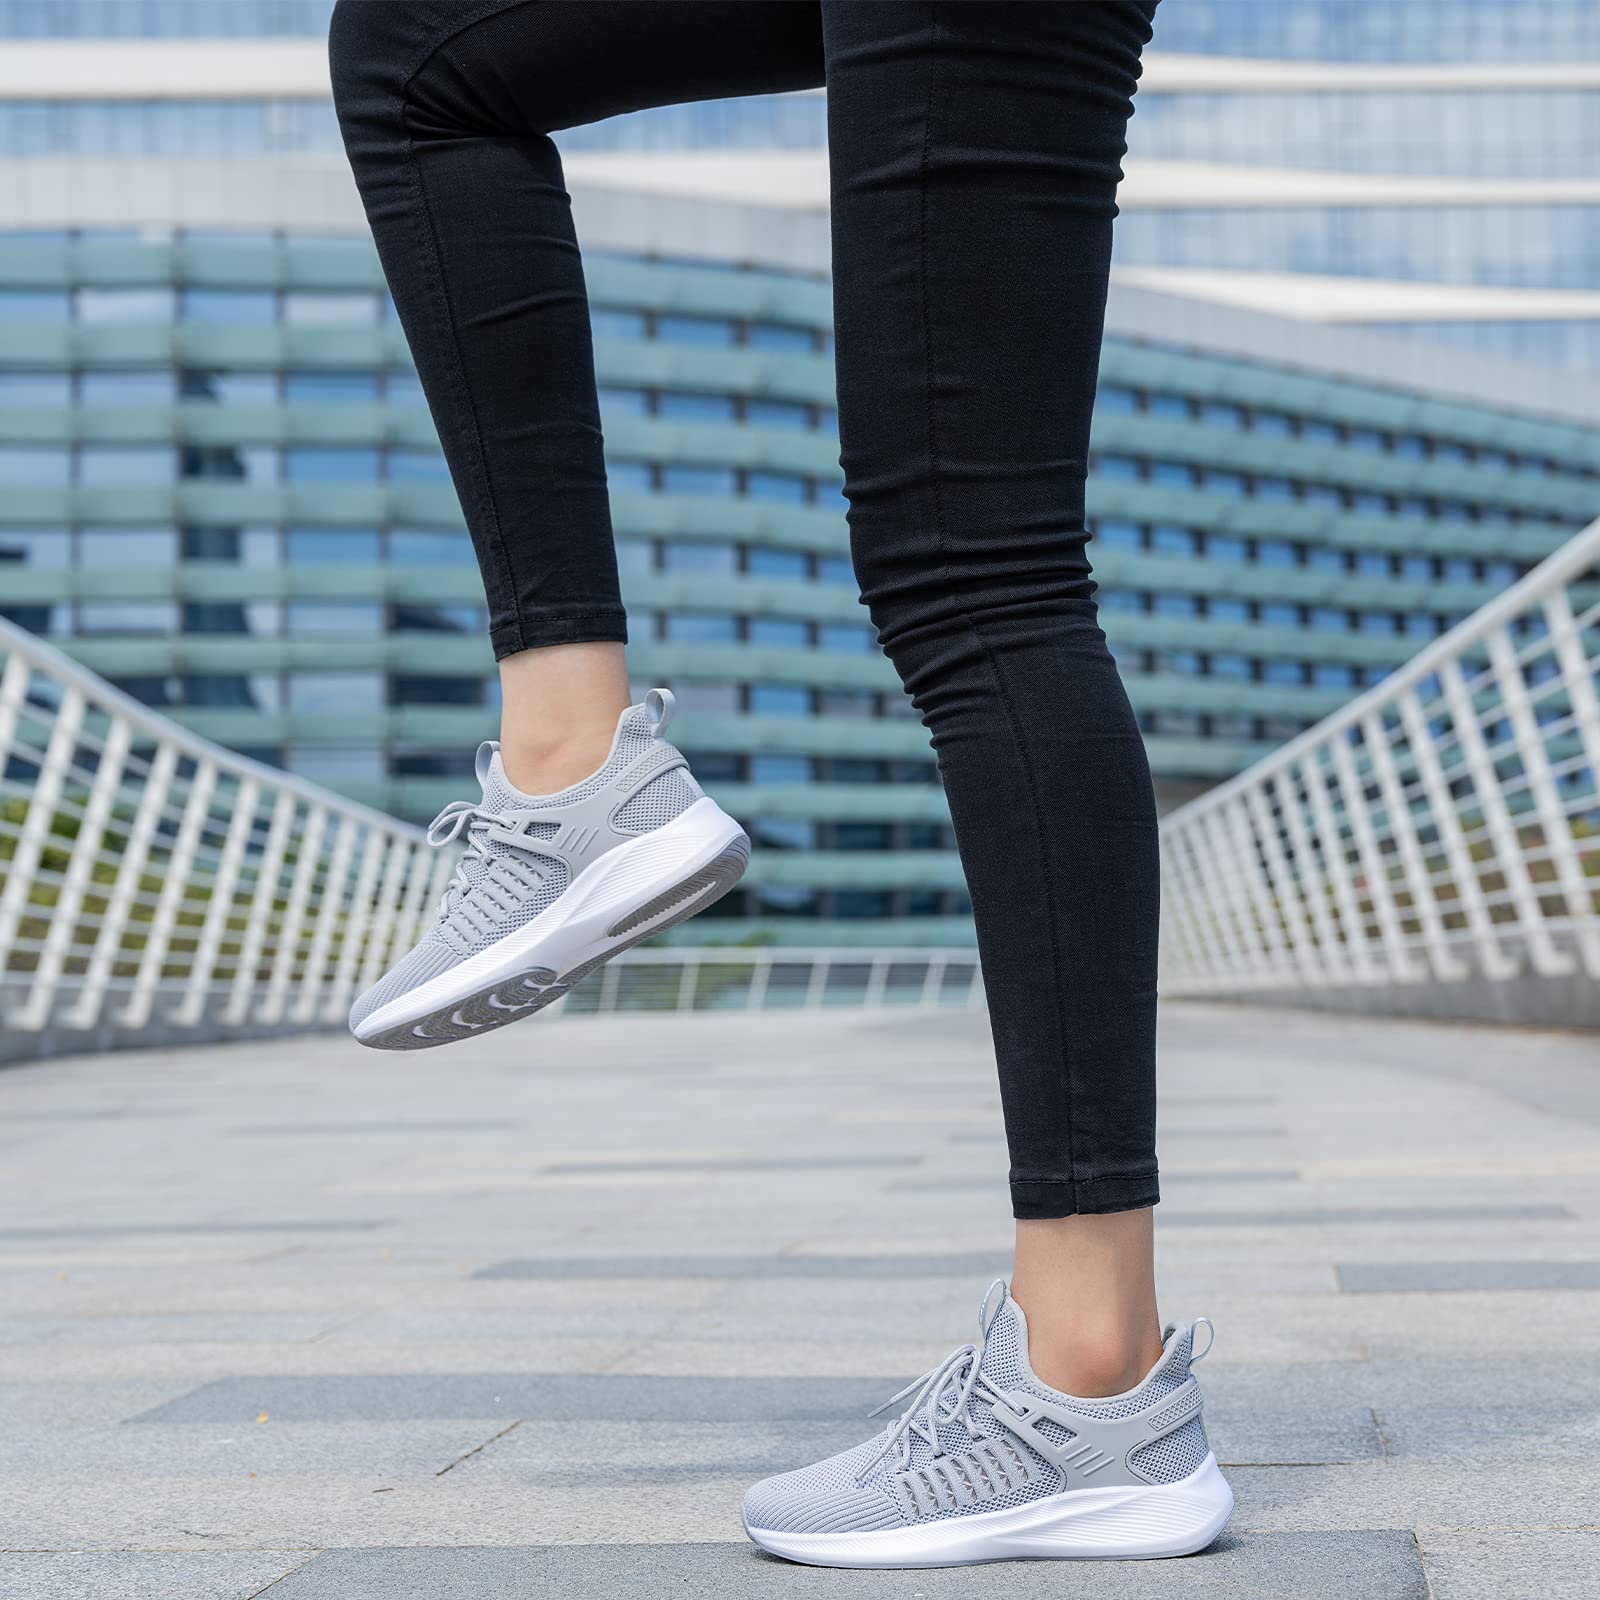 SDolphin Running Shoes Women Sneakers - Walking Tennis Shoes